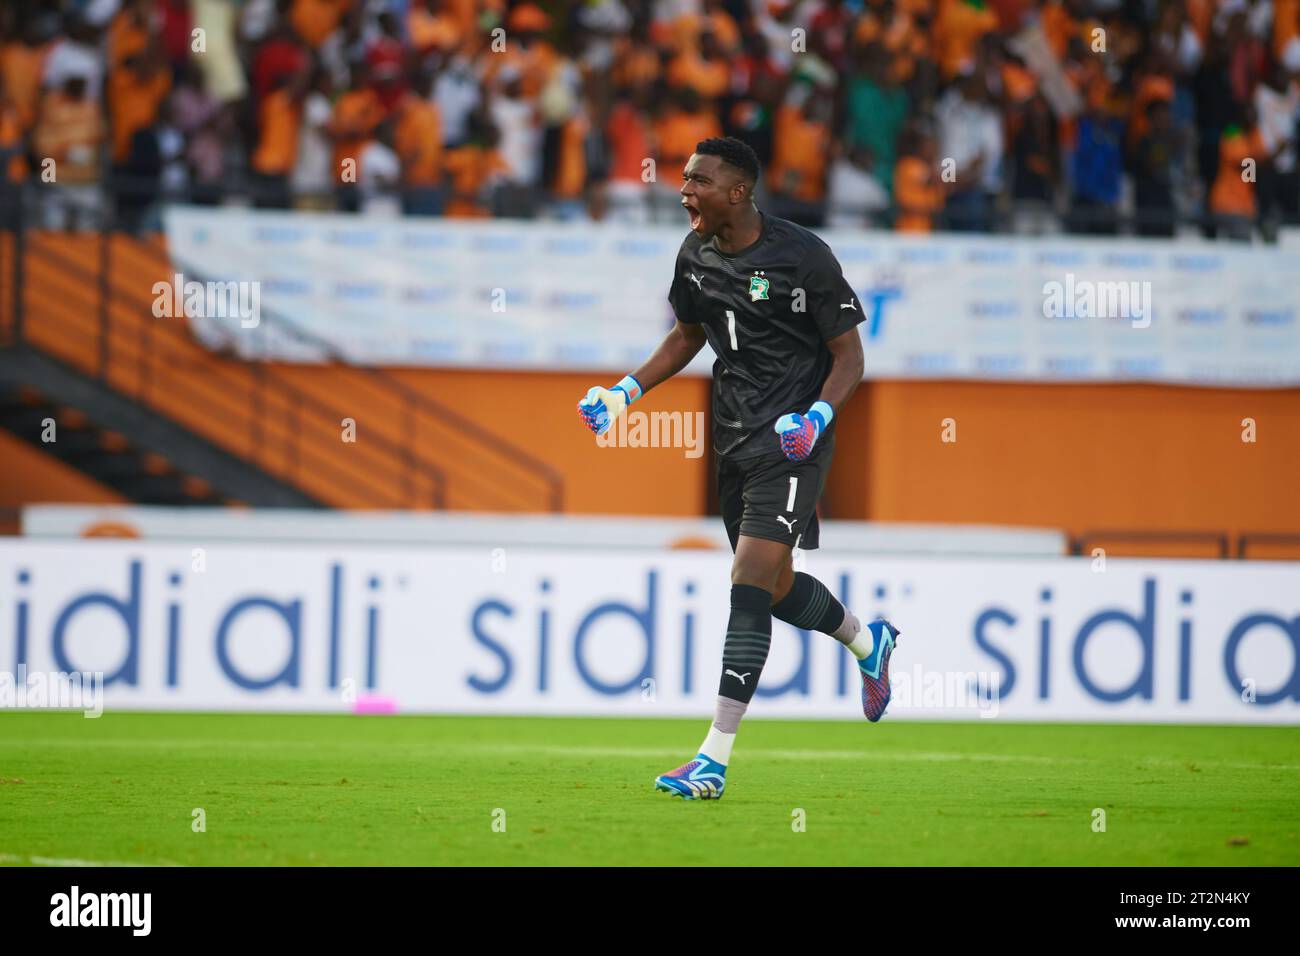 Ivorian goalkeeper Fofana Yahia happy after his team's goal. Stock Photo